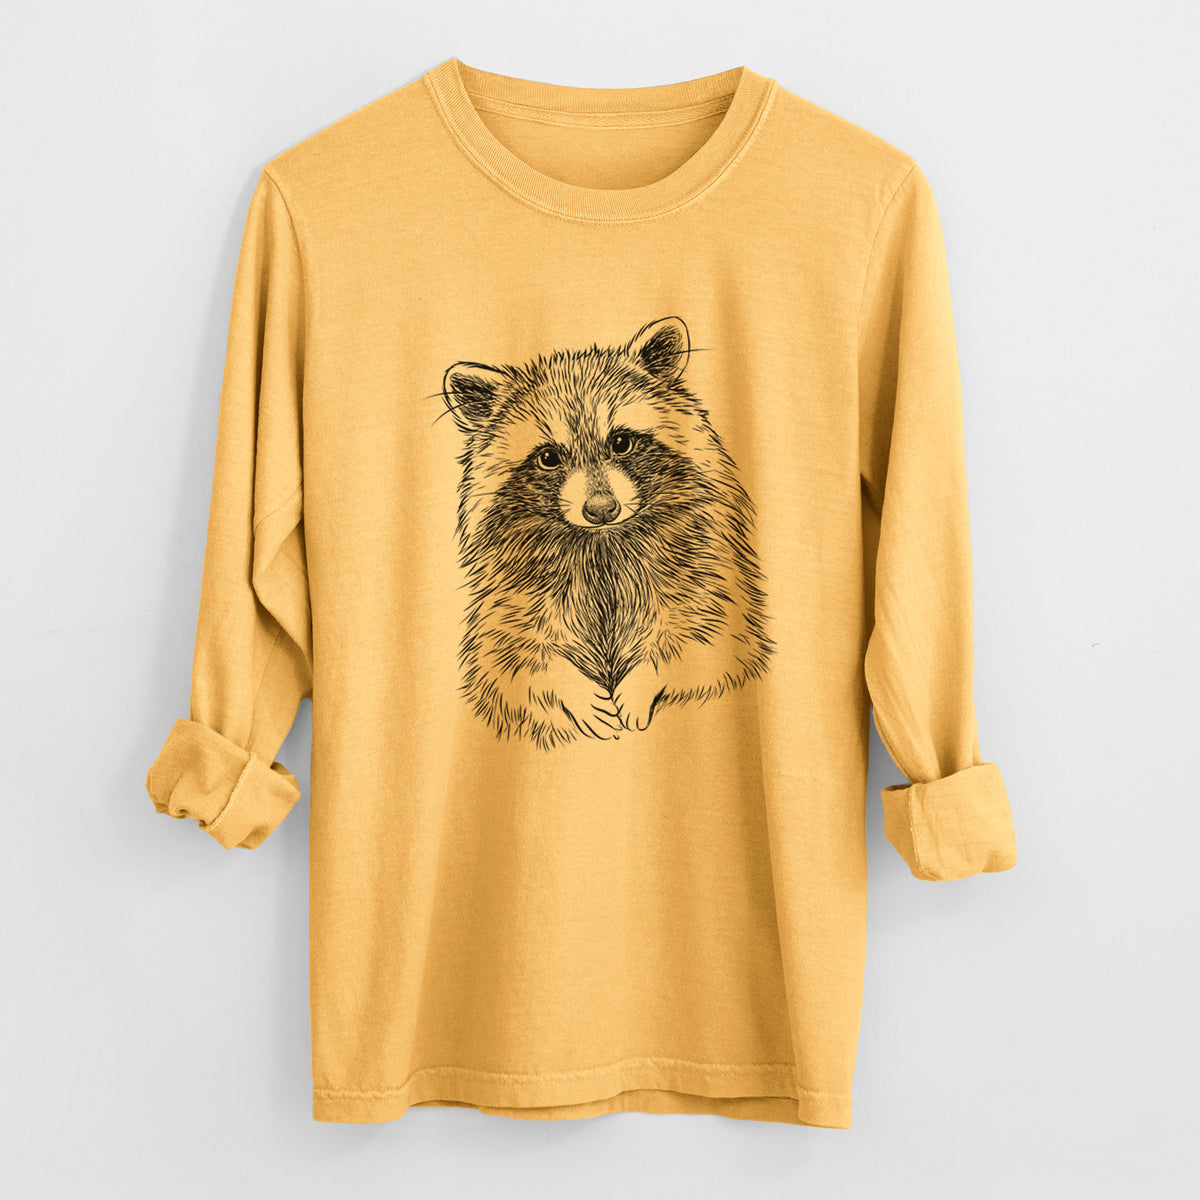 Raccoon - Procyon lotor - Heavyweight 100% Cotton Long Sleeve